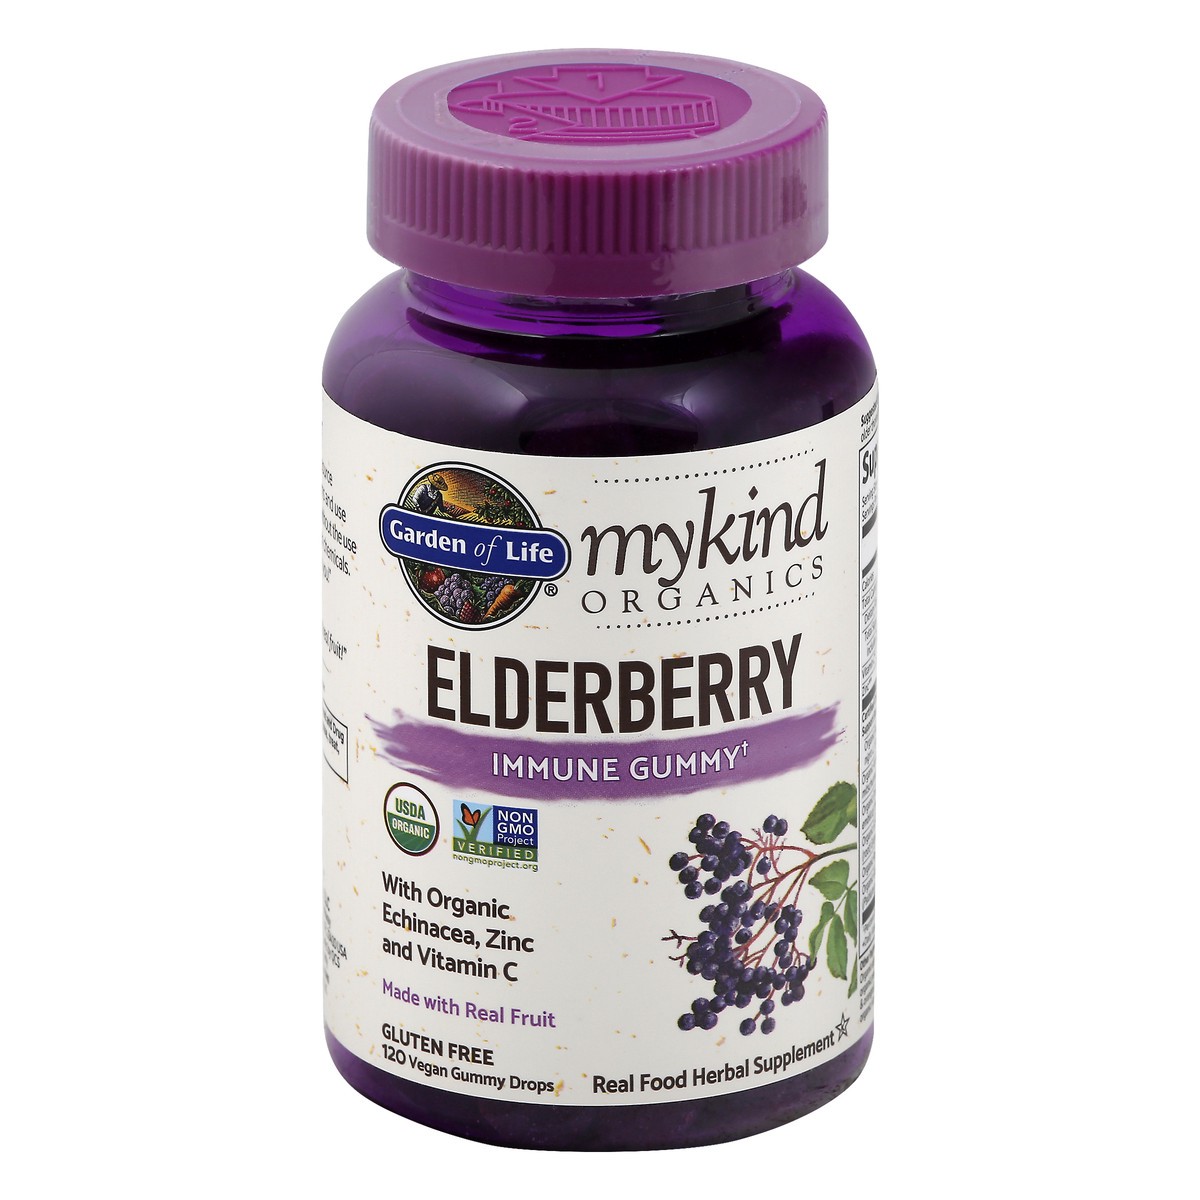 slide 1 of 9, mykind Organics Vegan Gummy Drops Elderberry Immune Gummy 120 ea, 120 ct